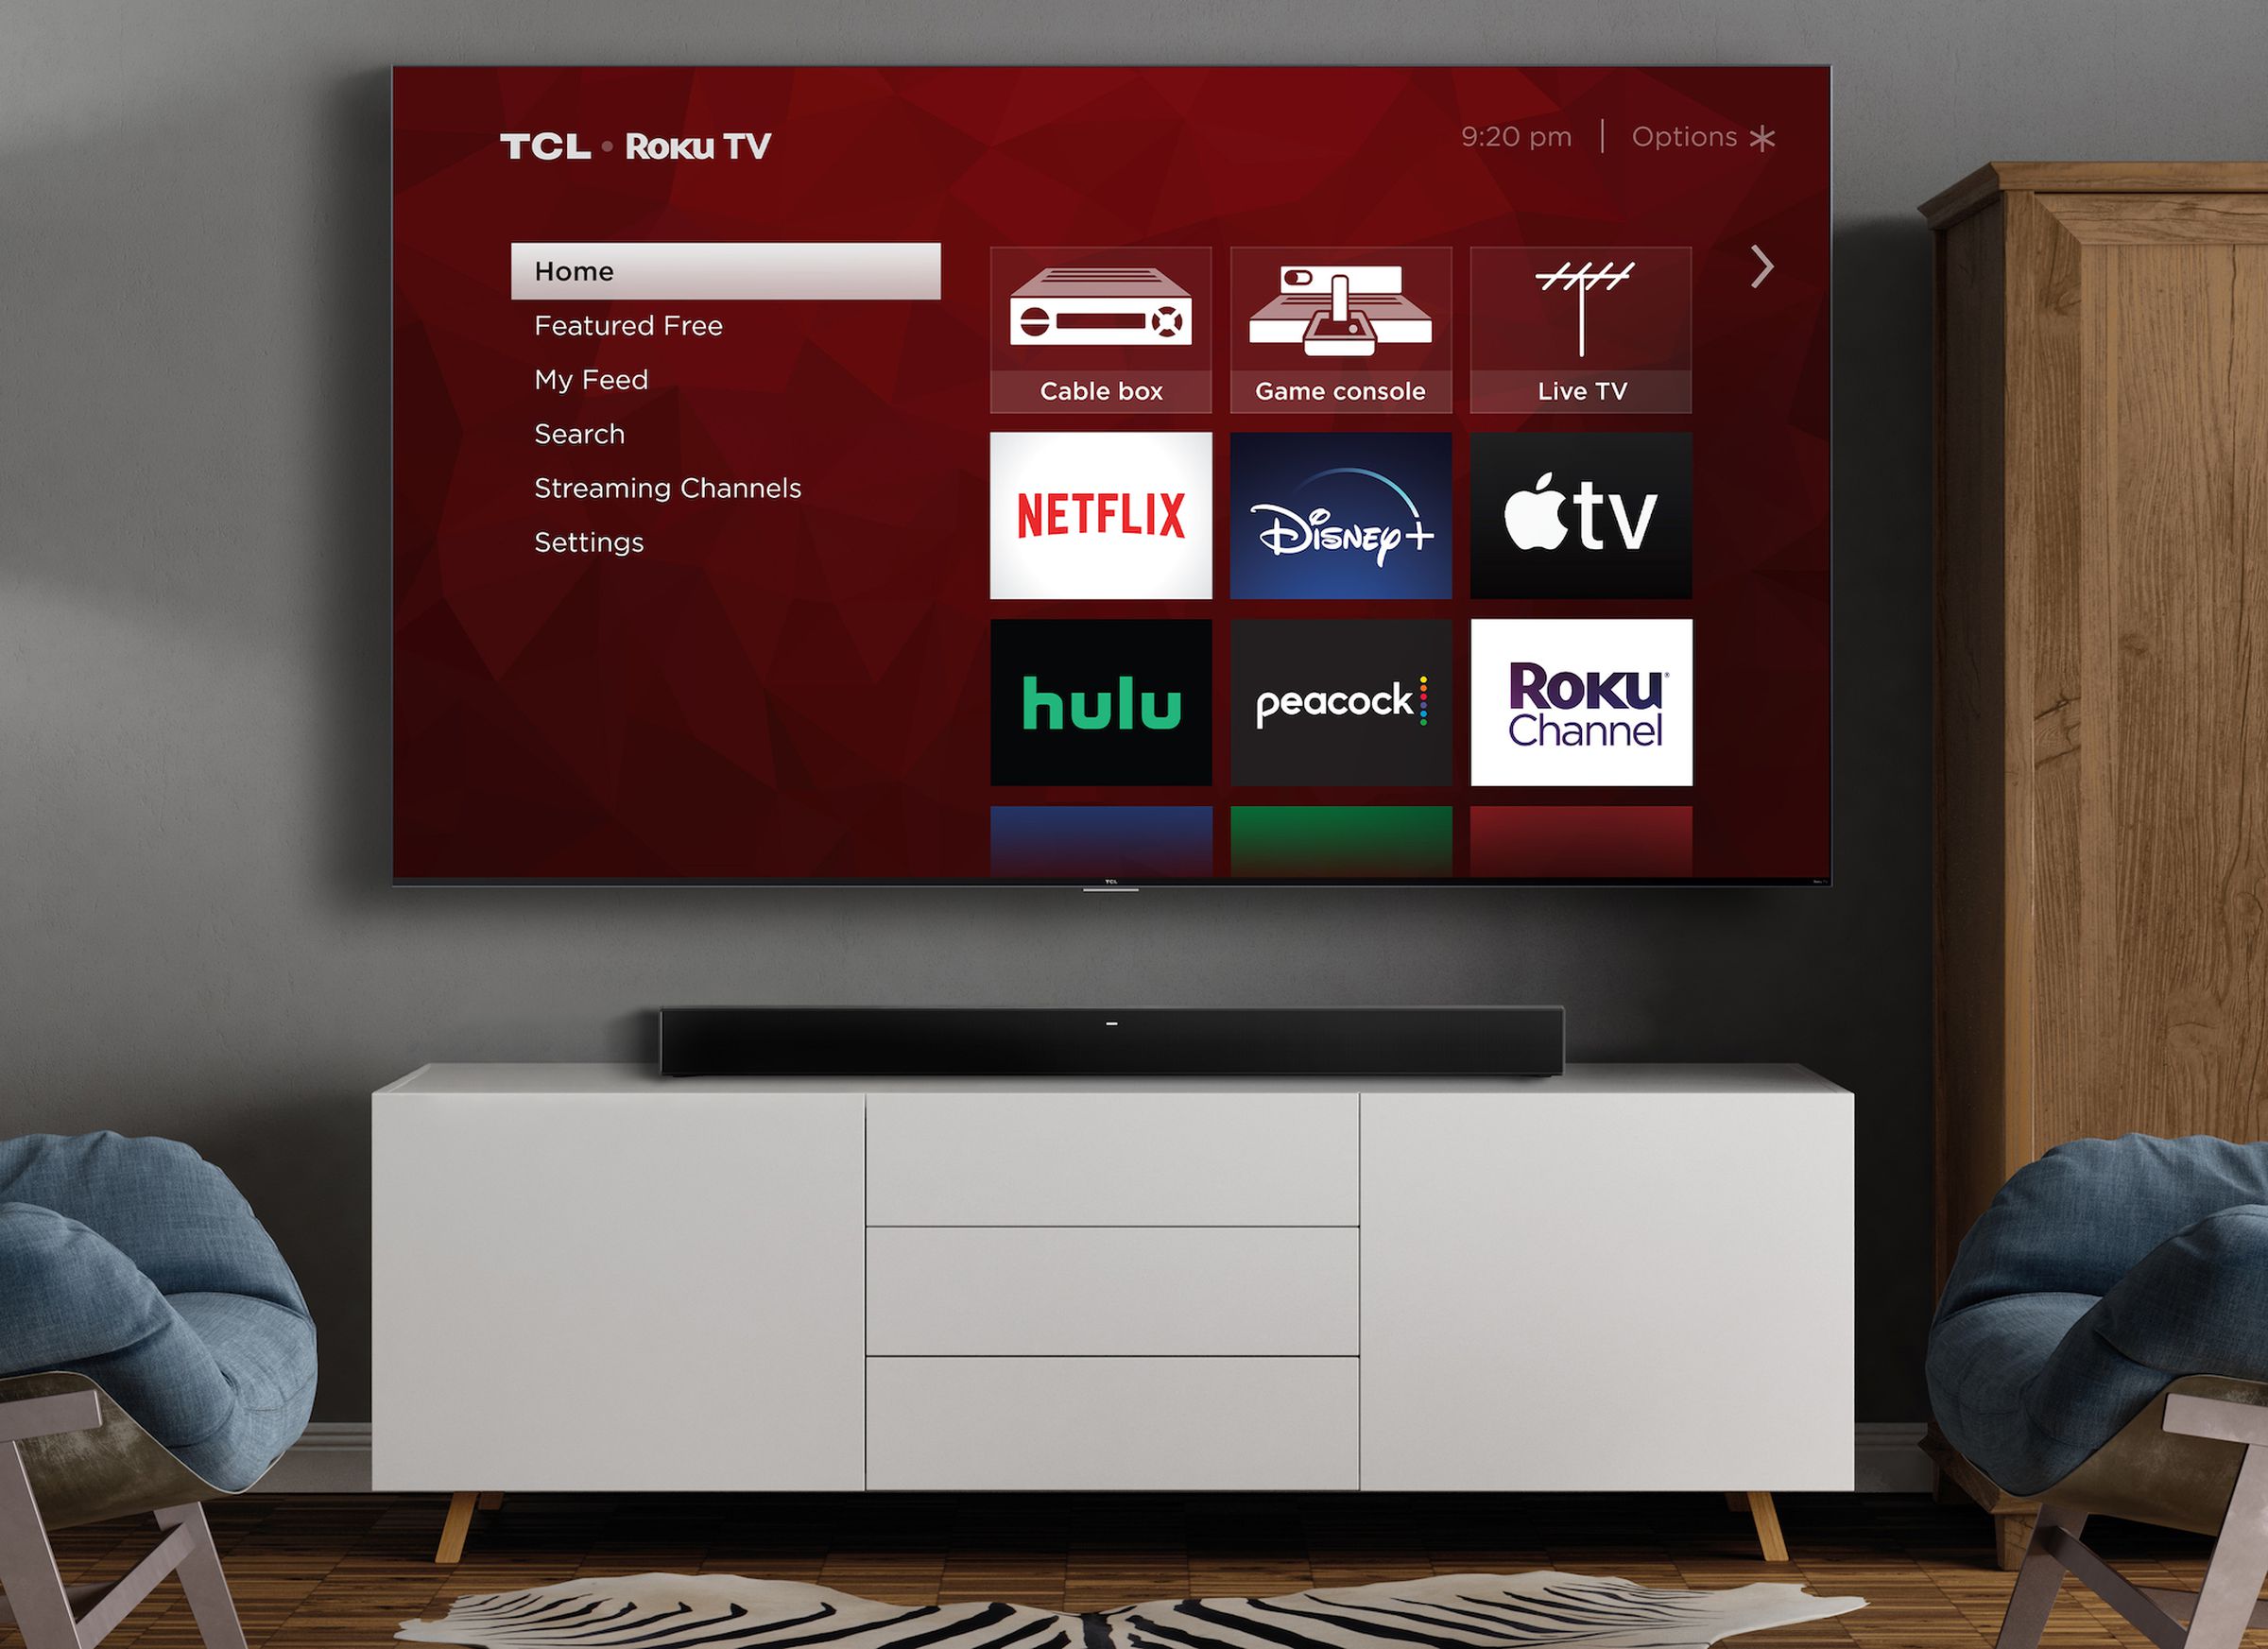 TCL is releasing a soundbar designed for Roku TVs.